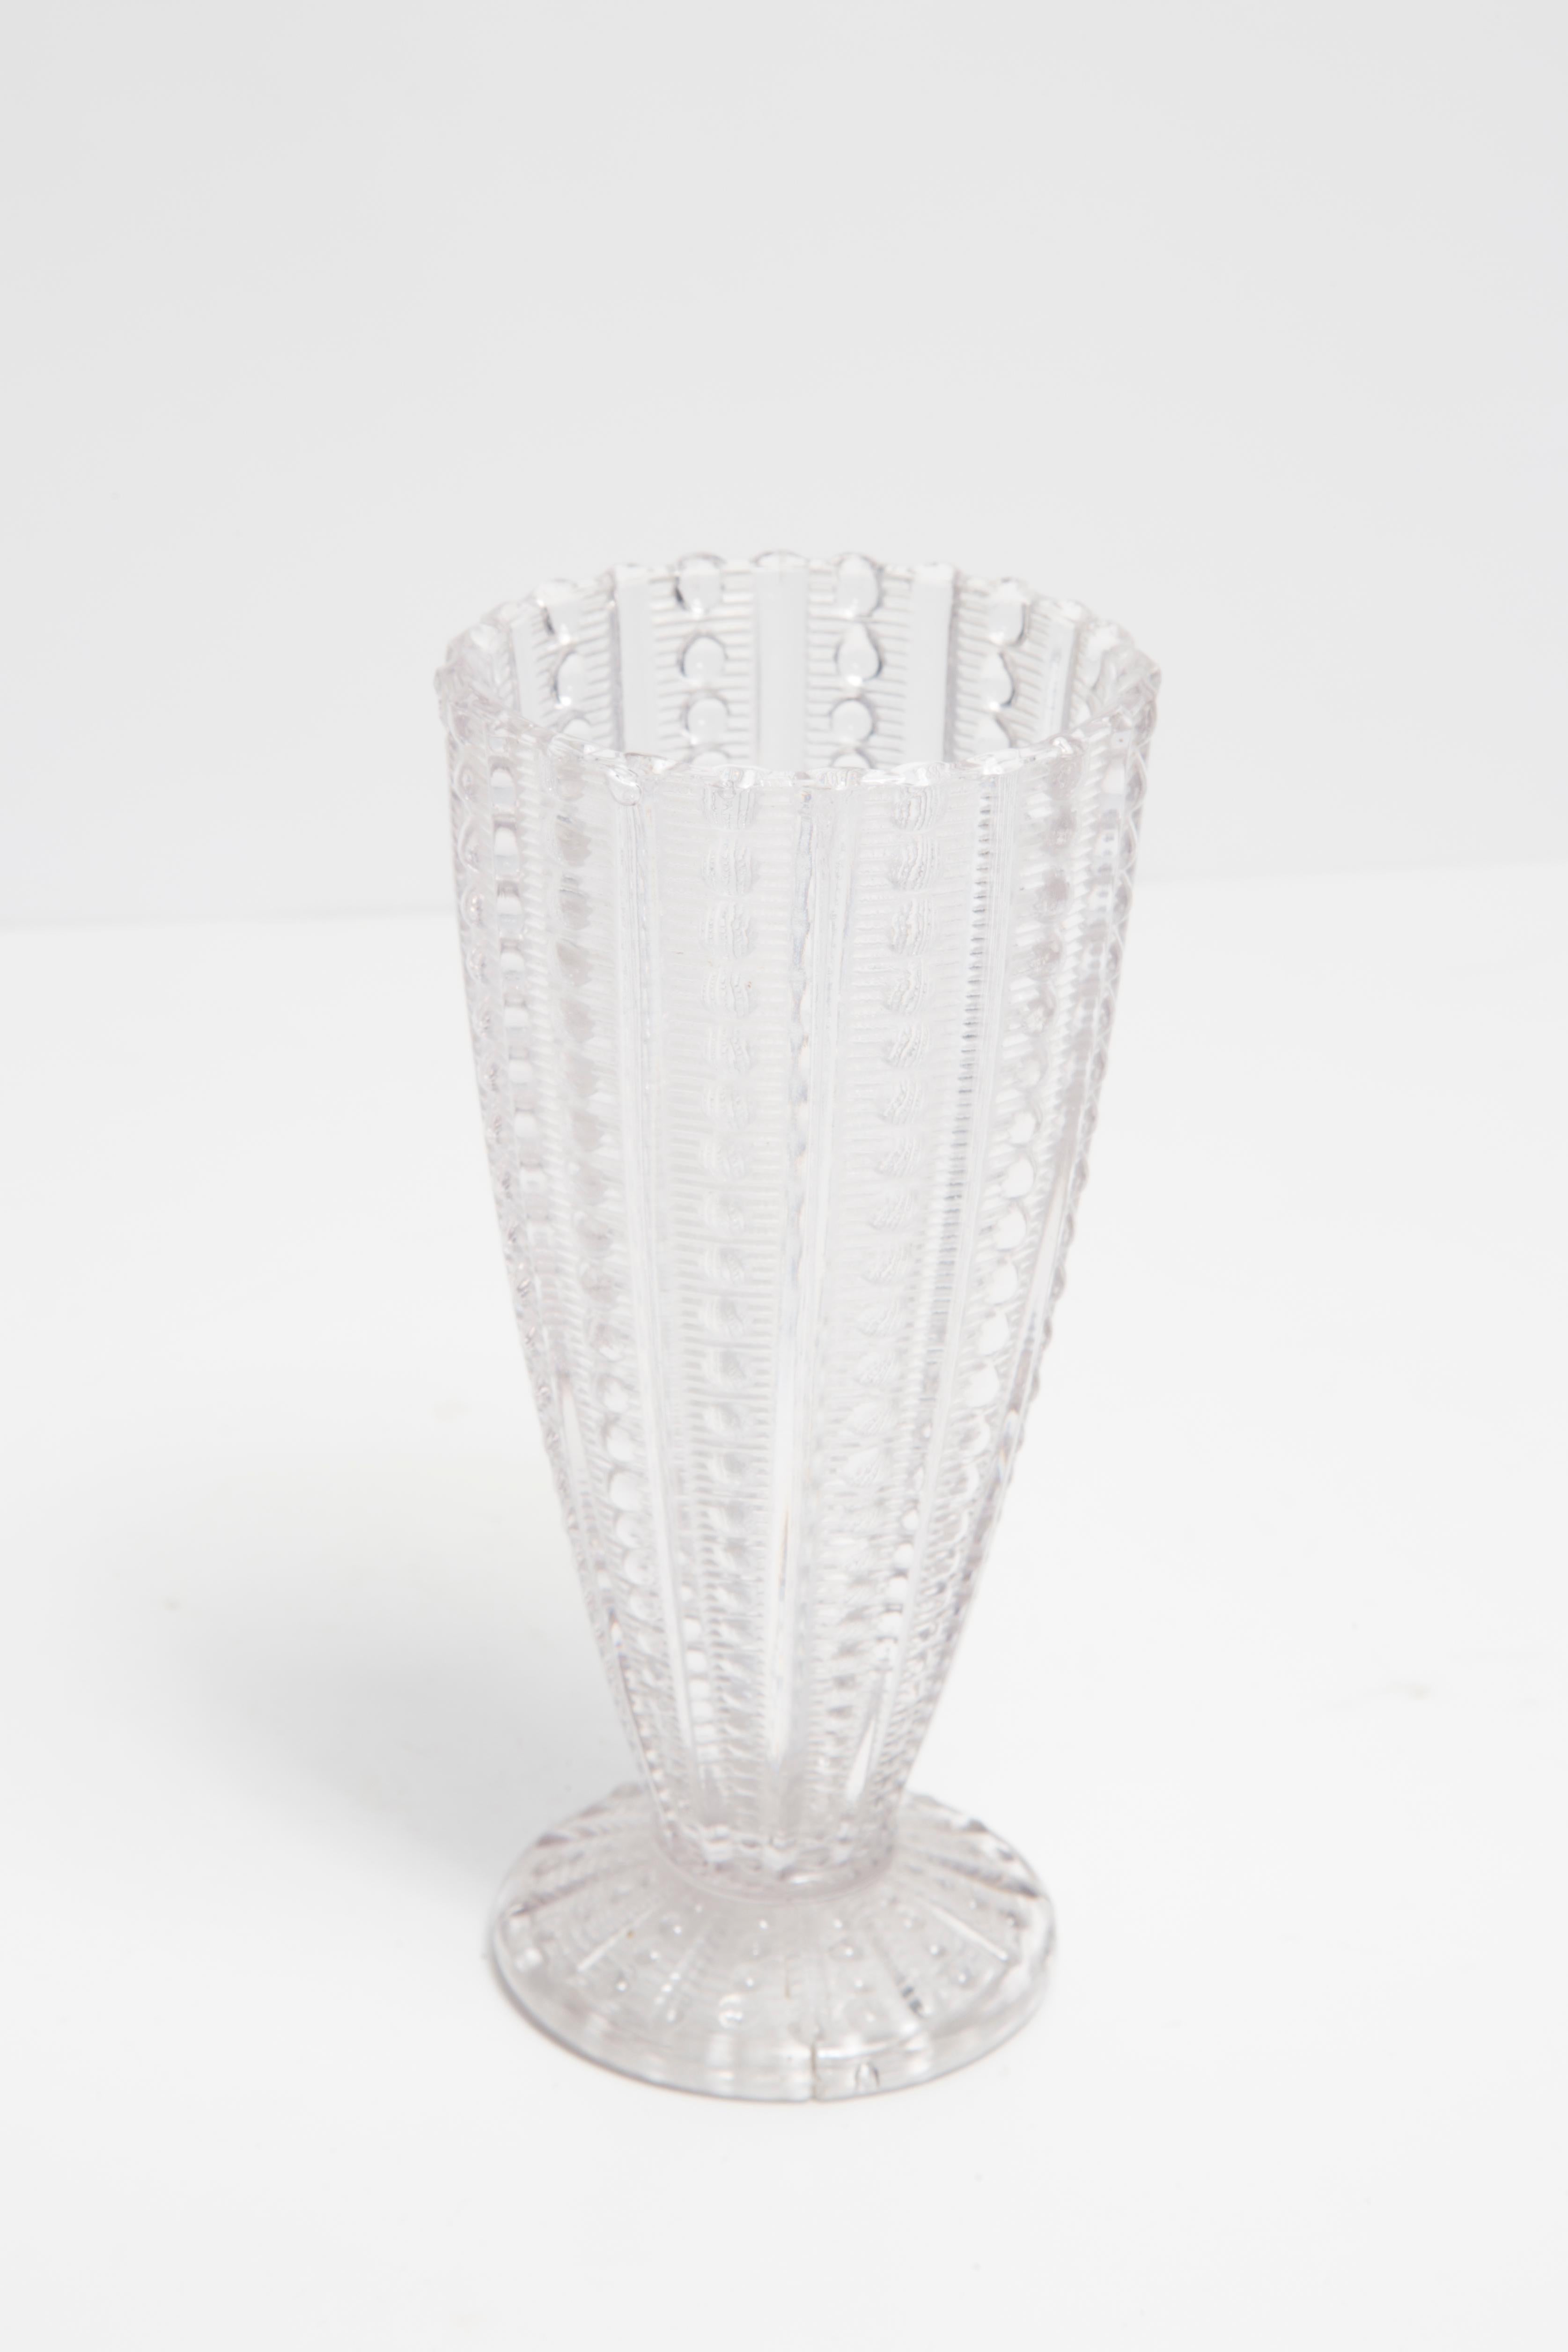 Italian Mid Century Vintage Transparent Art Glass Vase, Italy, 1960s For Sale